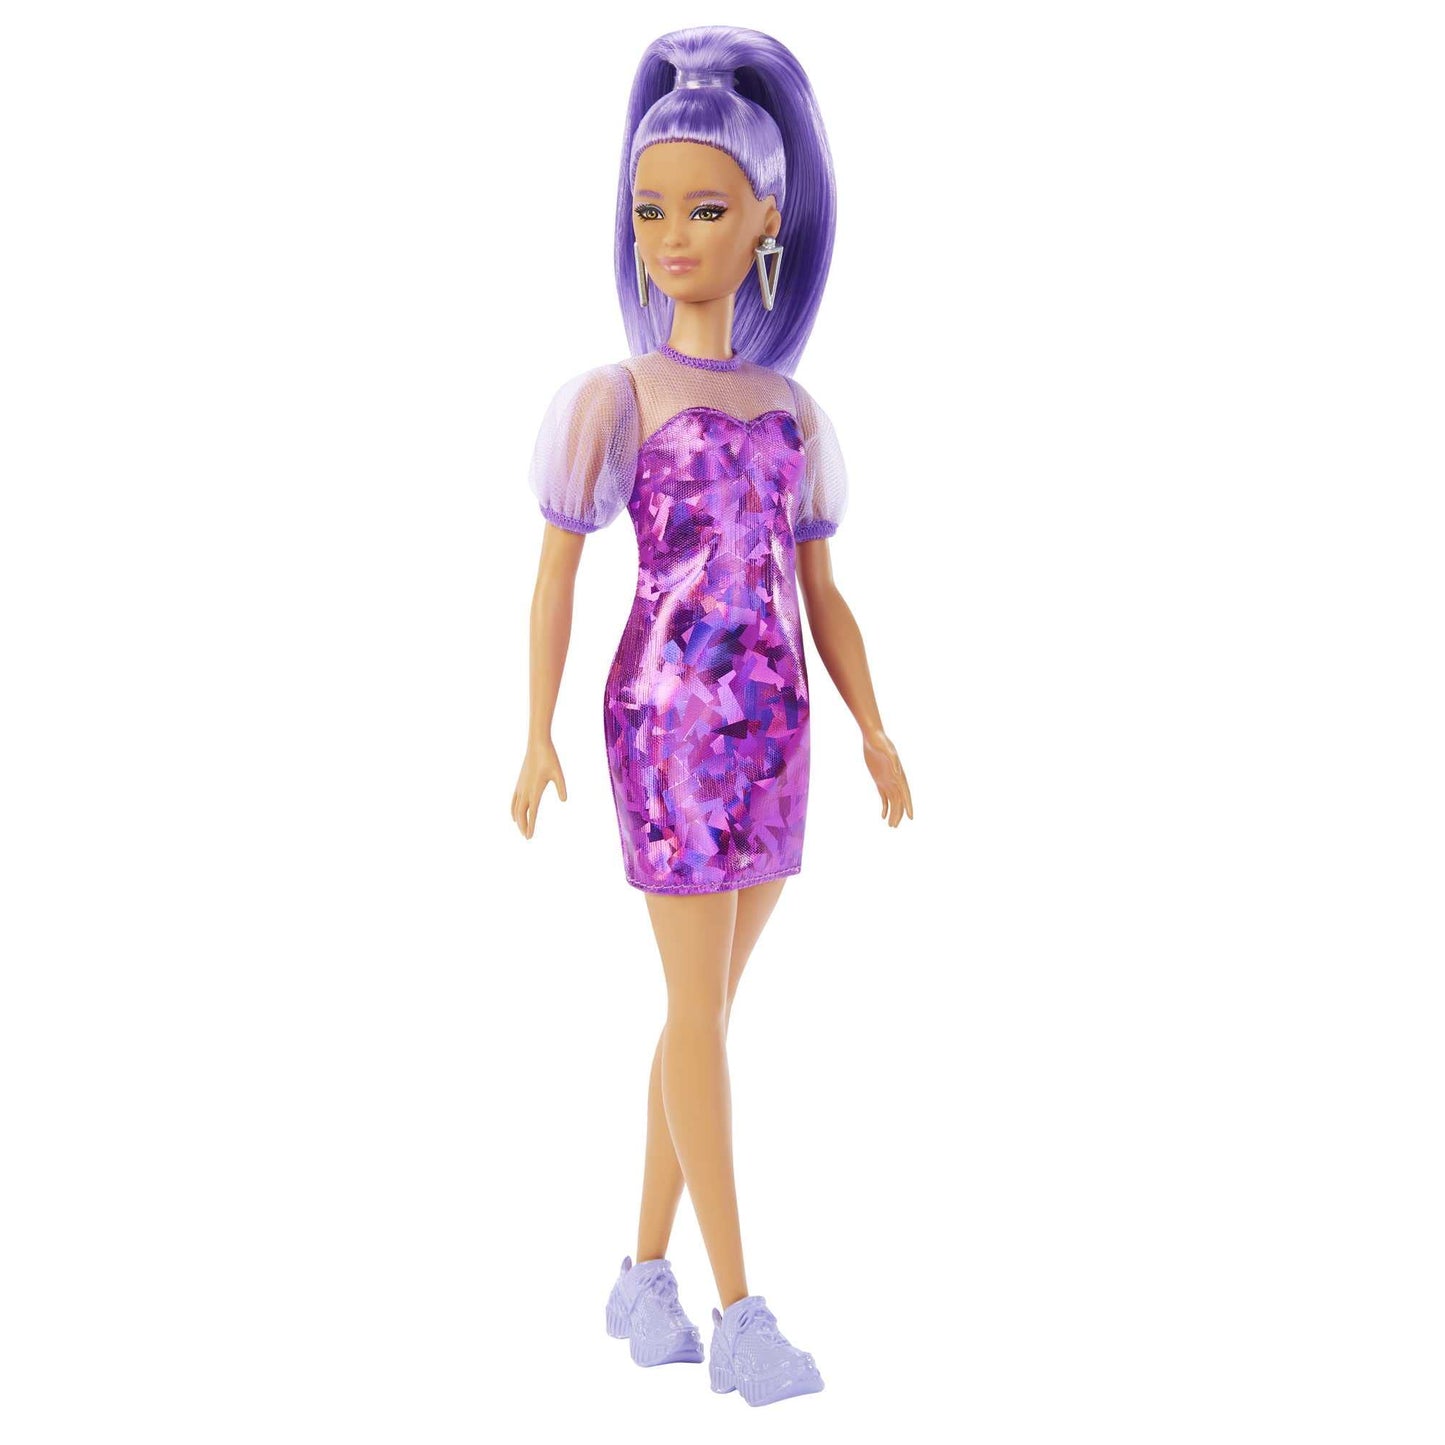 Barbie Fashionista Doll - Purple Monochrome Dress